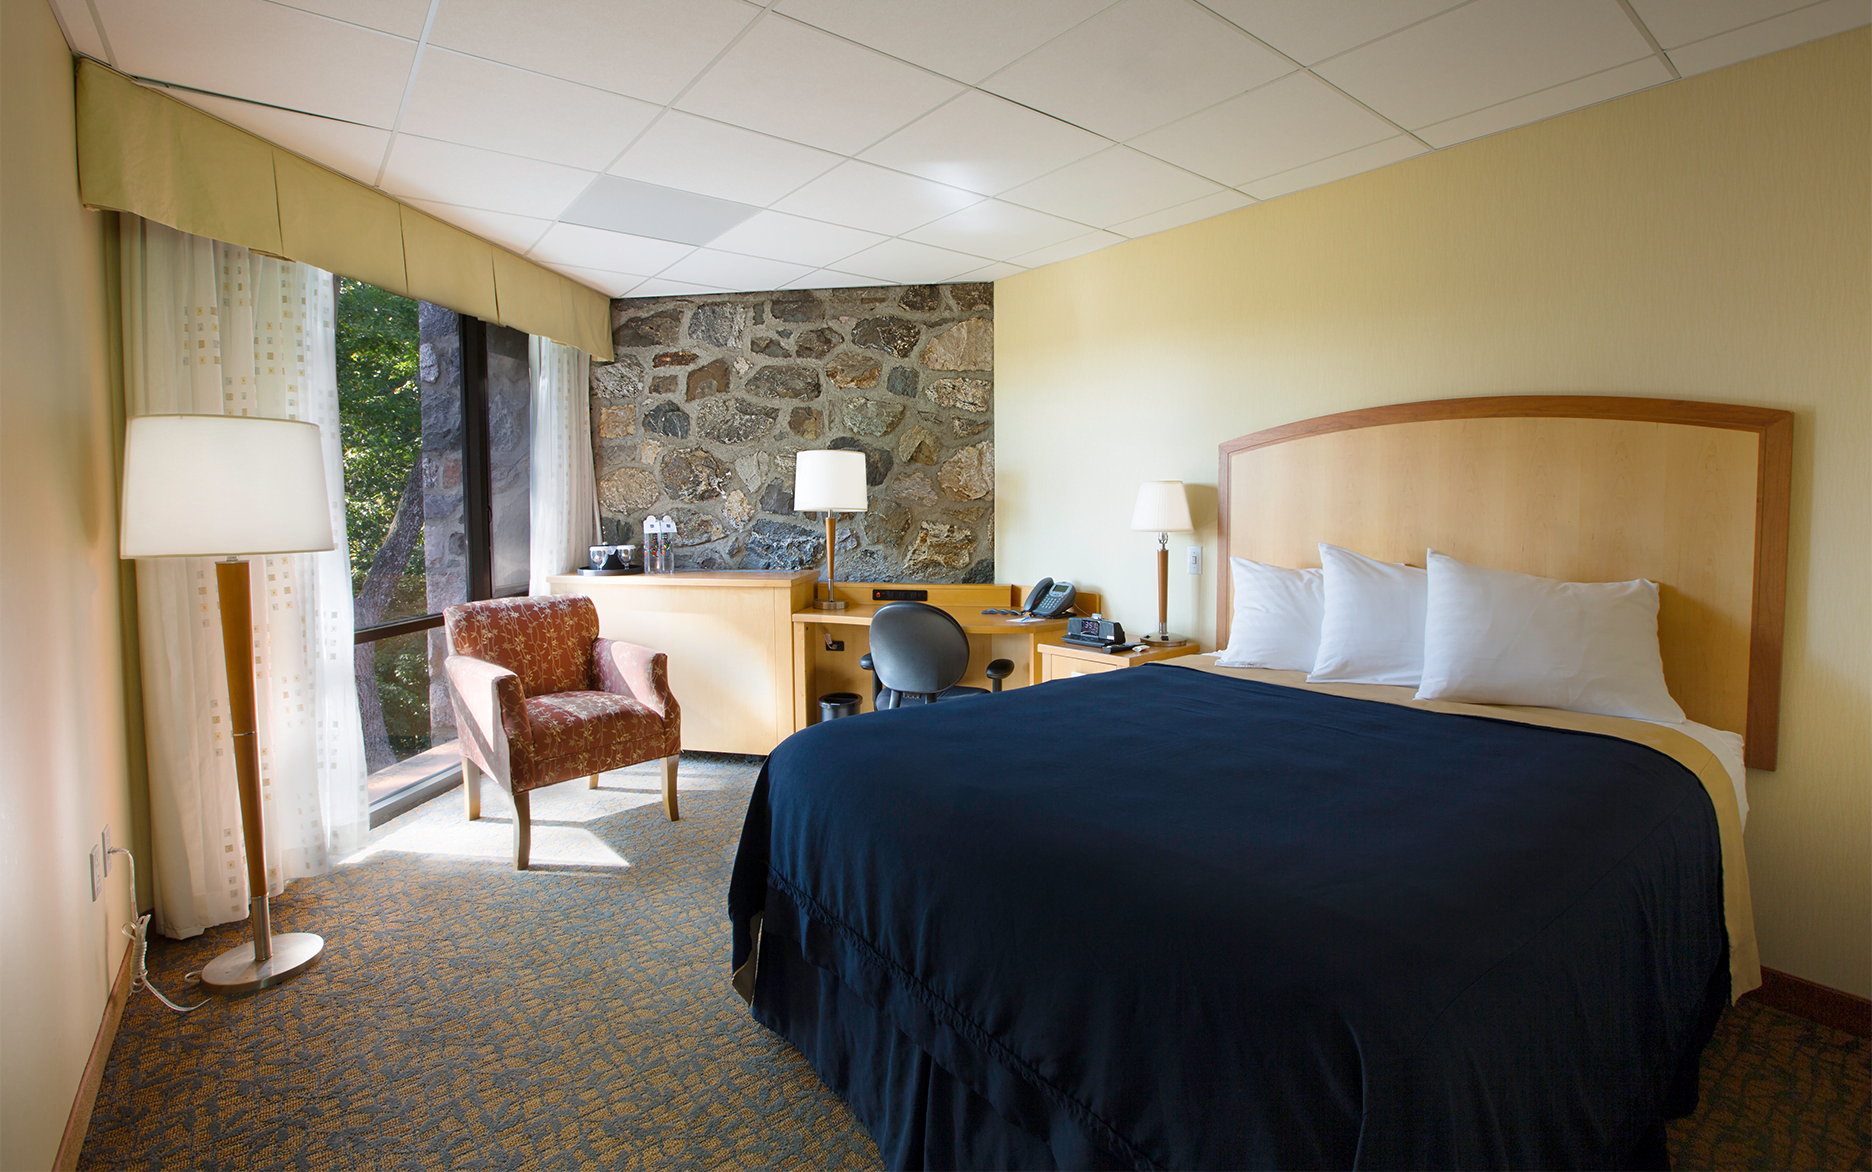 Accommodations at The Louis V. Gerstner, Jr. Center for Learning | Bedroom